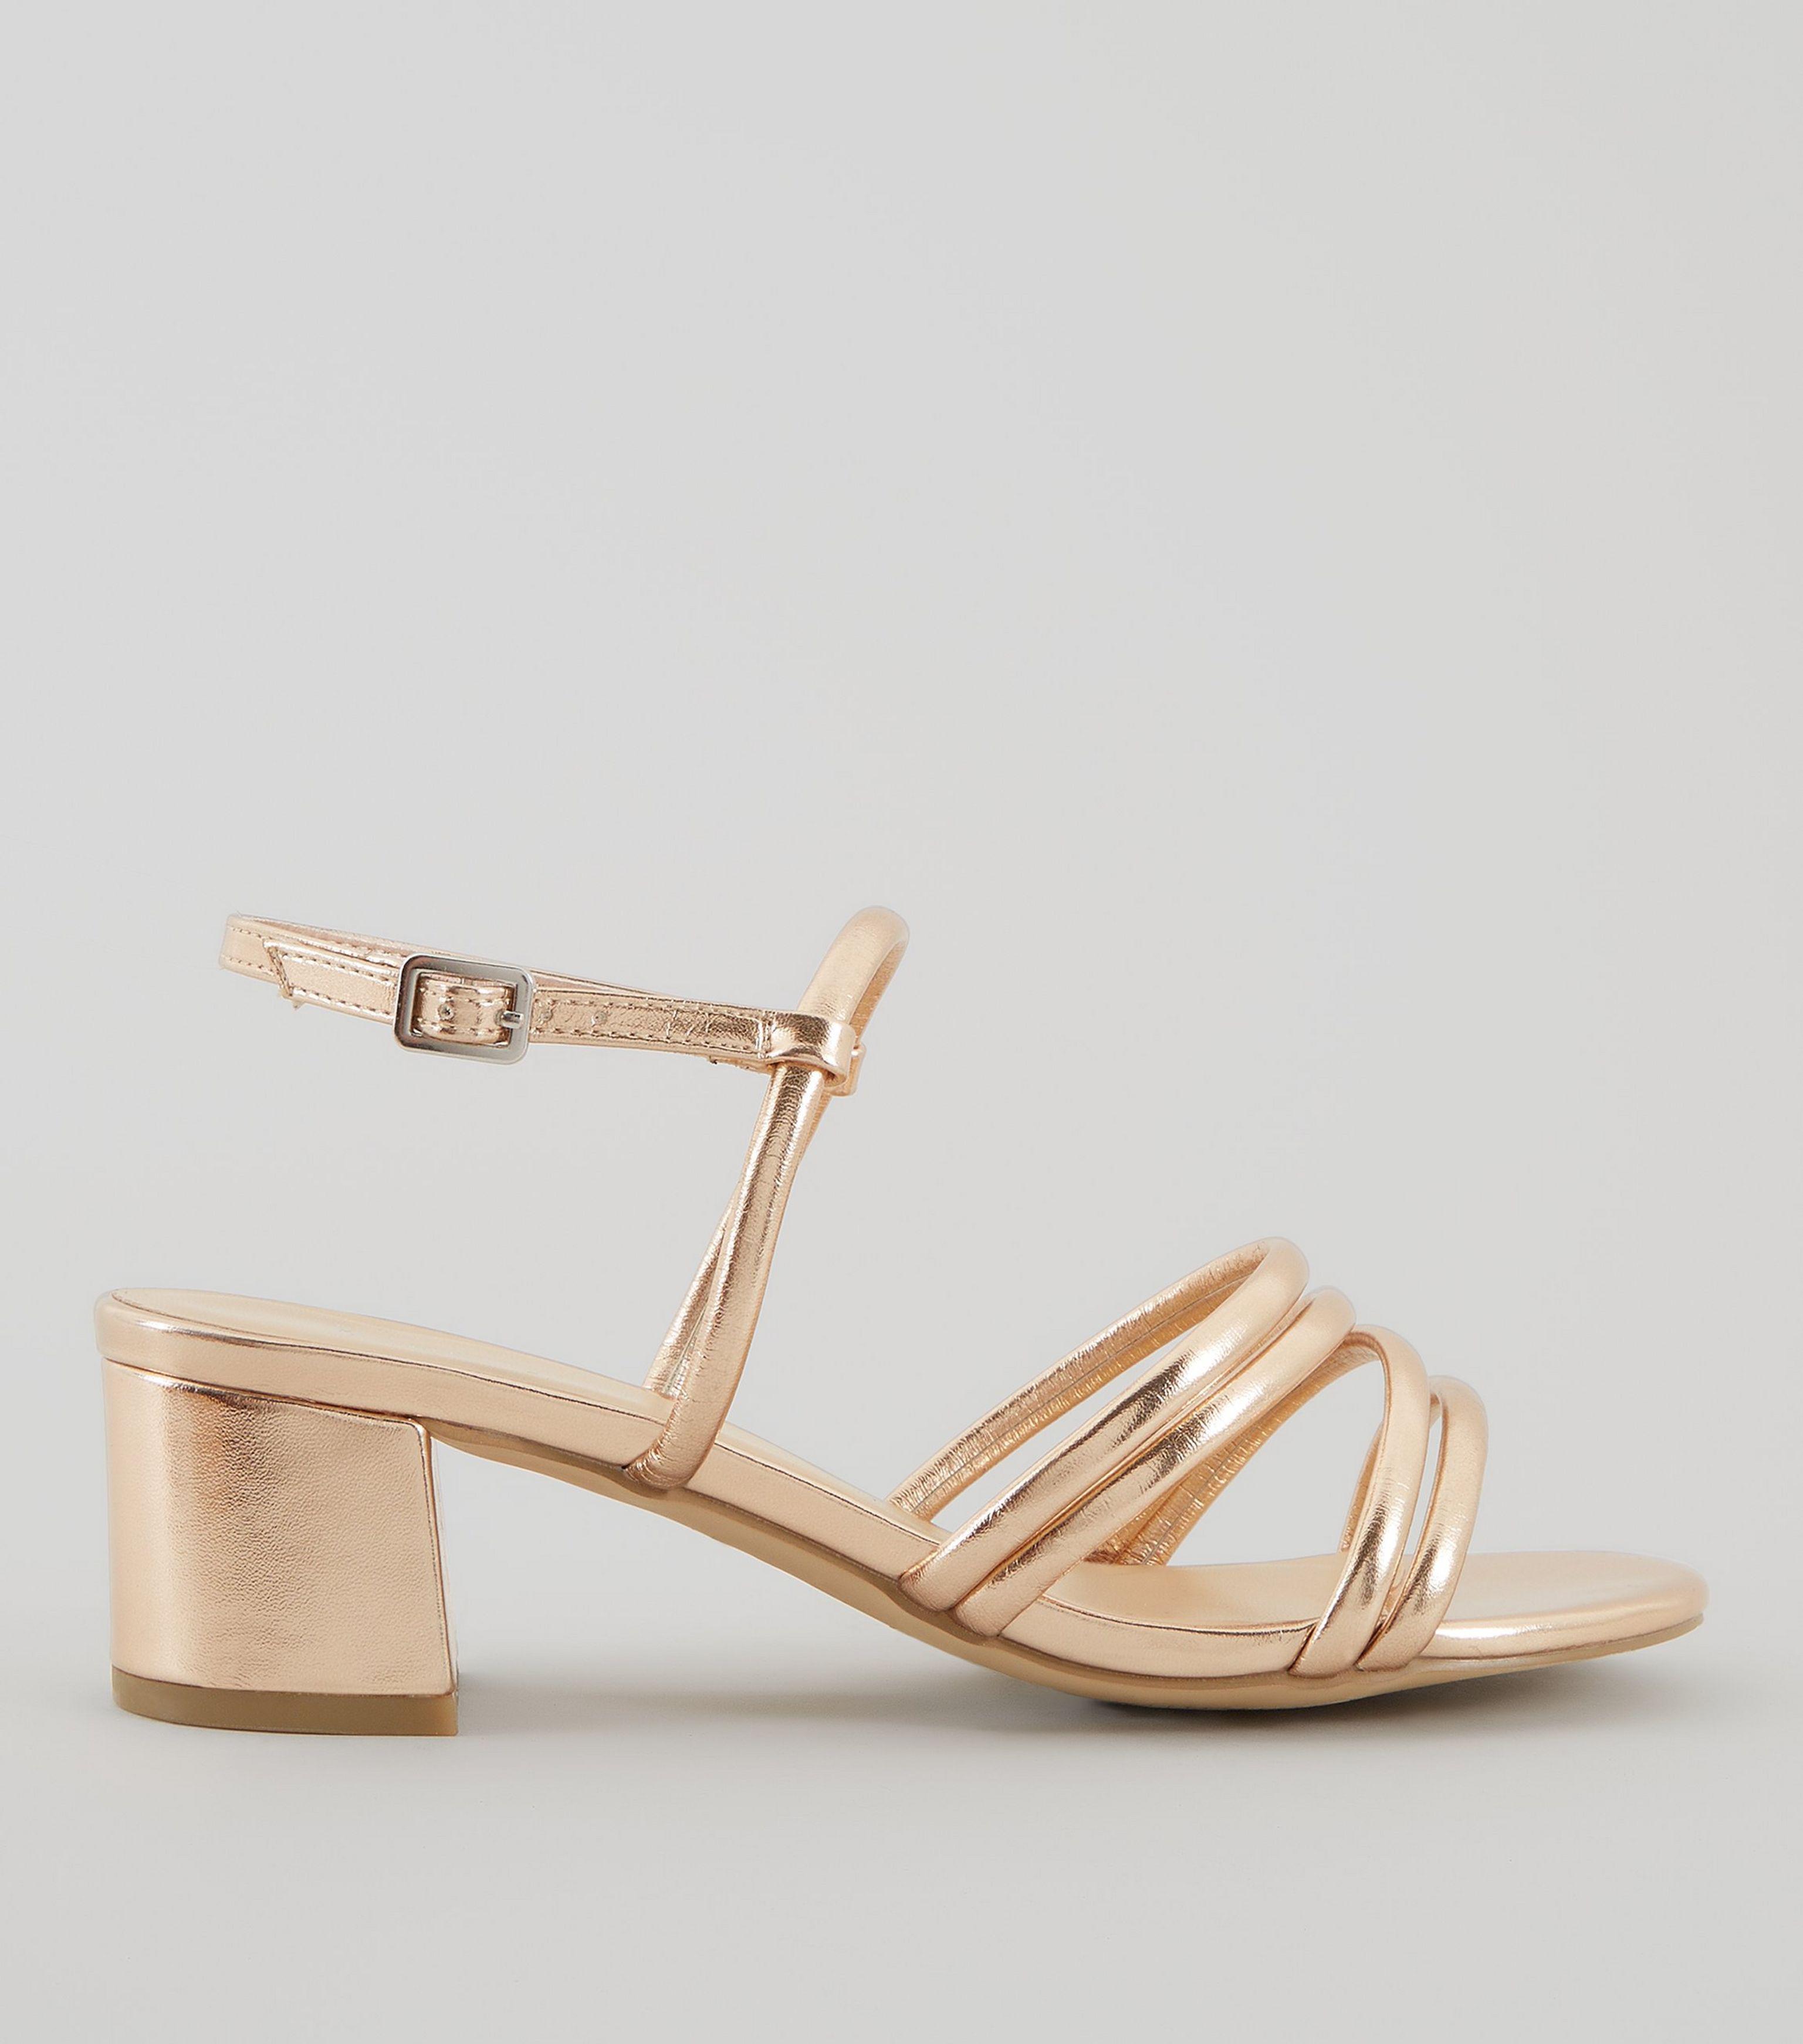 Buy > new look gold heeled sandals > in stock